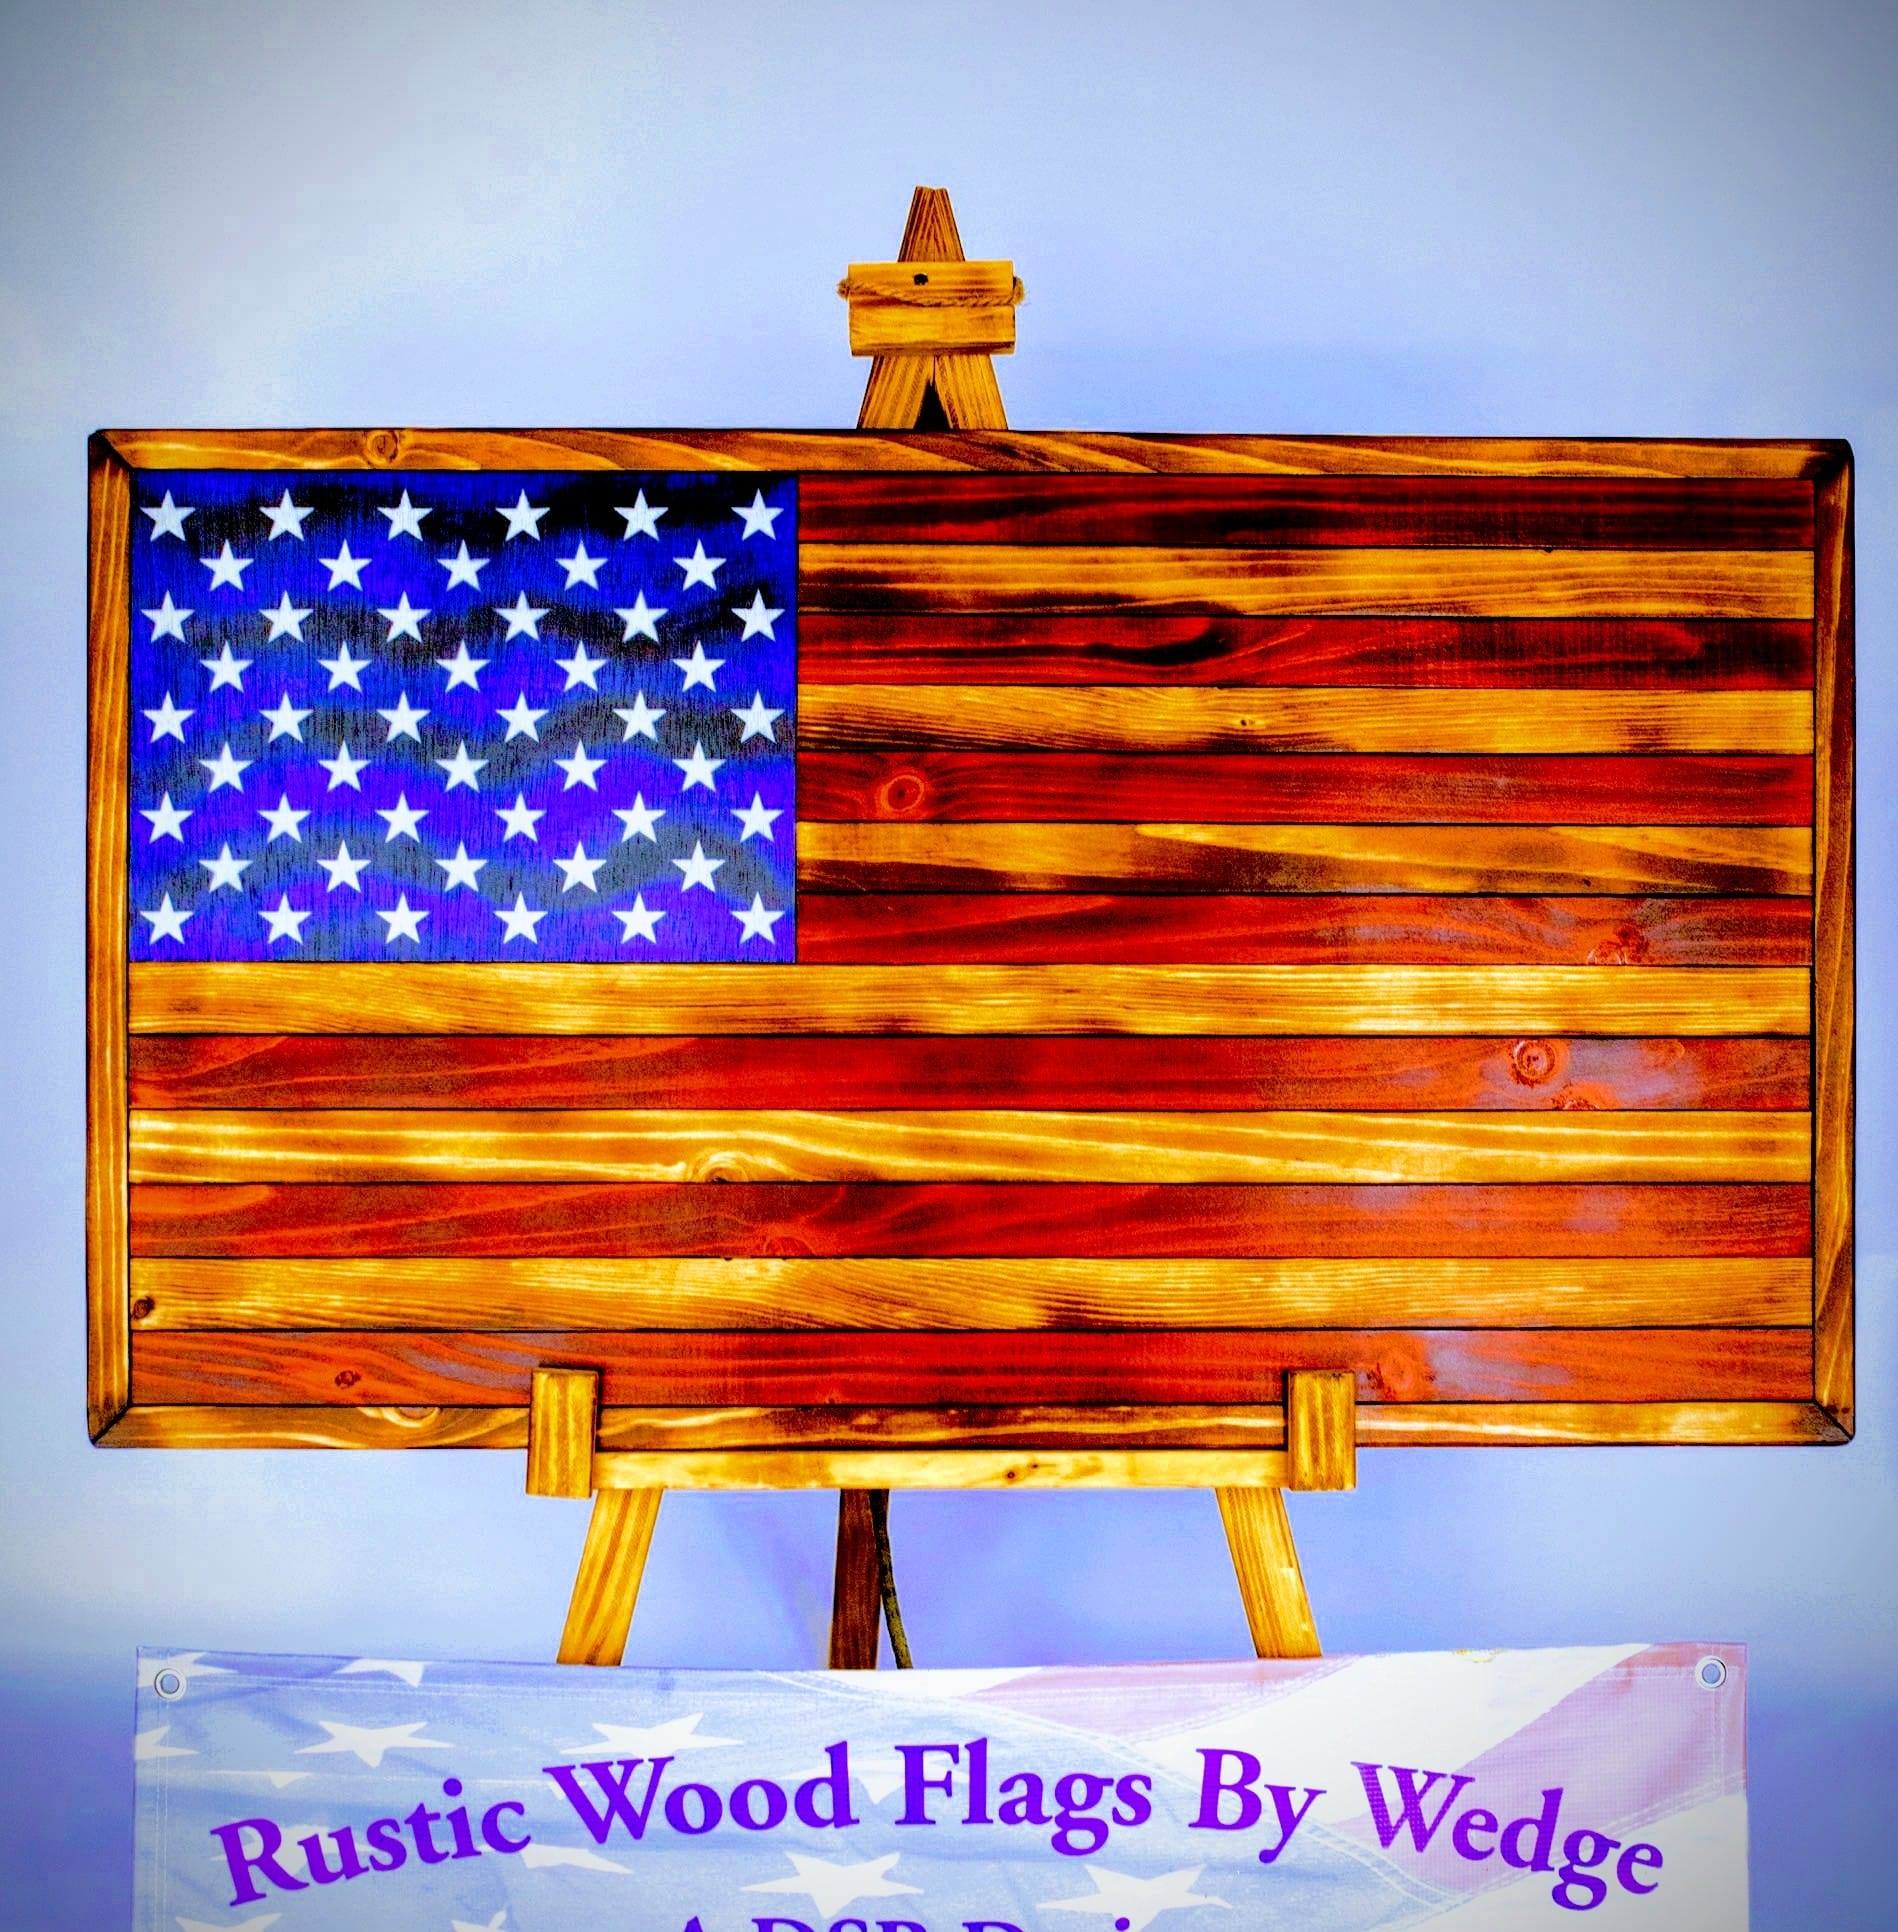 Rustic Wood Flags By Wedge